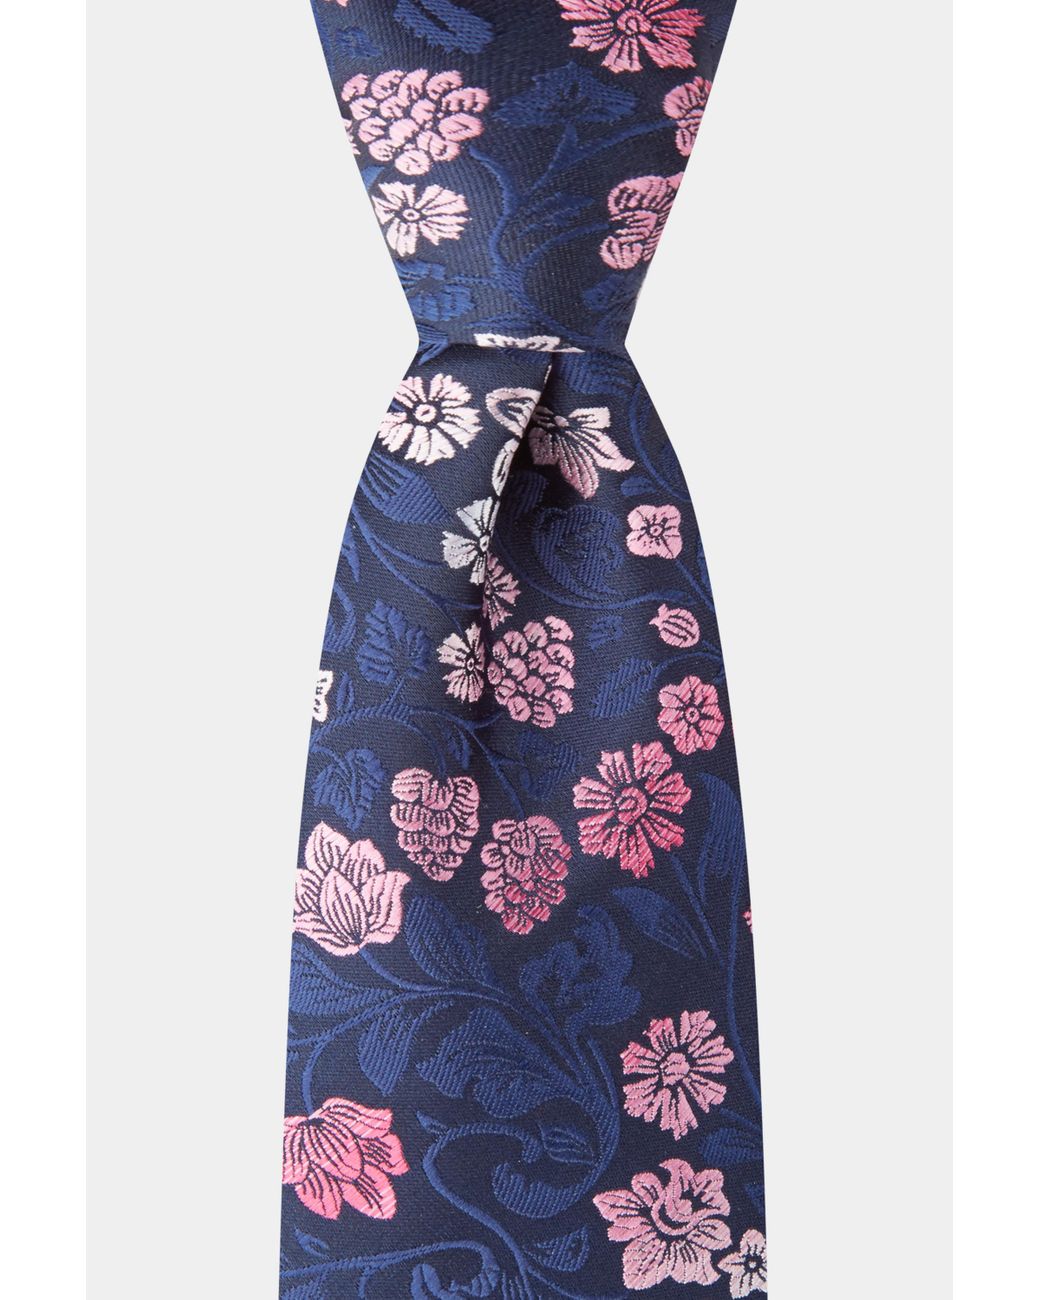 Revers Blume Fuchsia Pink Filz Barneys Stick Brosche Pin Herren Hemd Anzug Krawatte